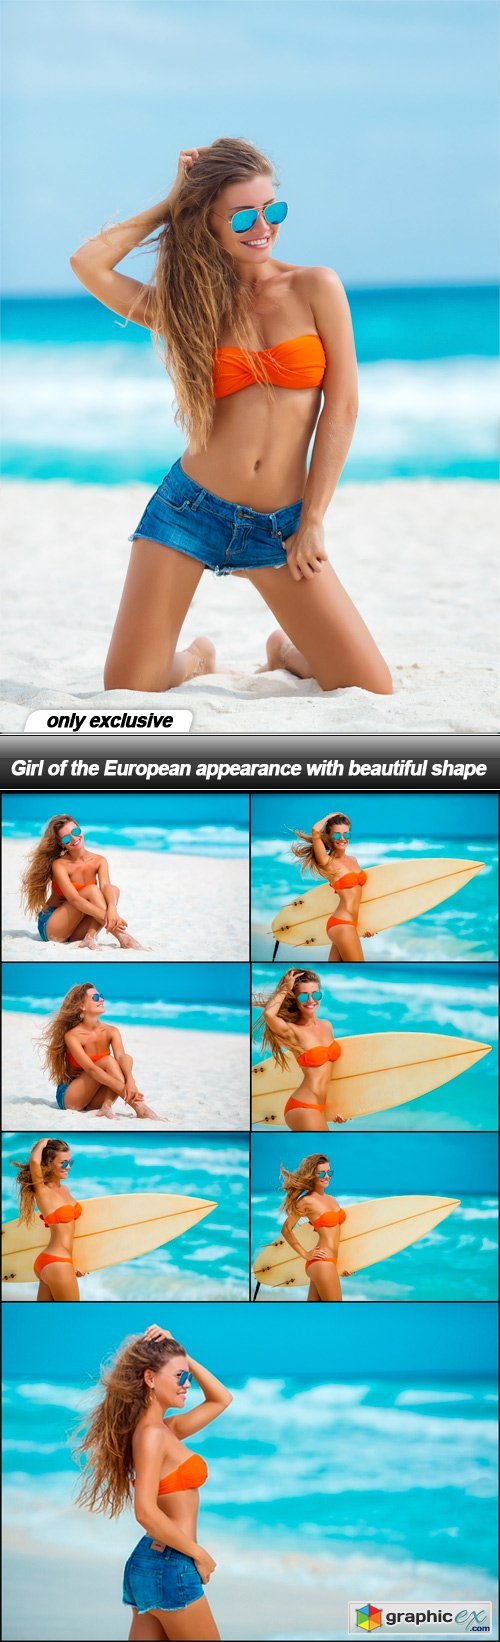 Girl of the European appearance with beautiful shape - 8 UHQ JPEG